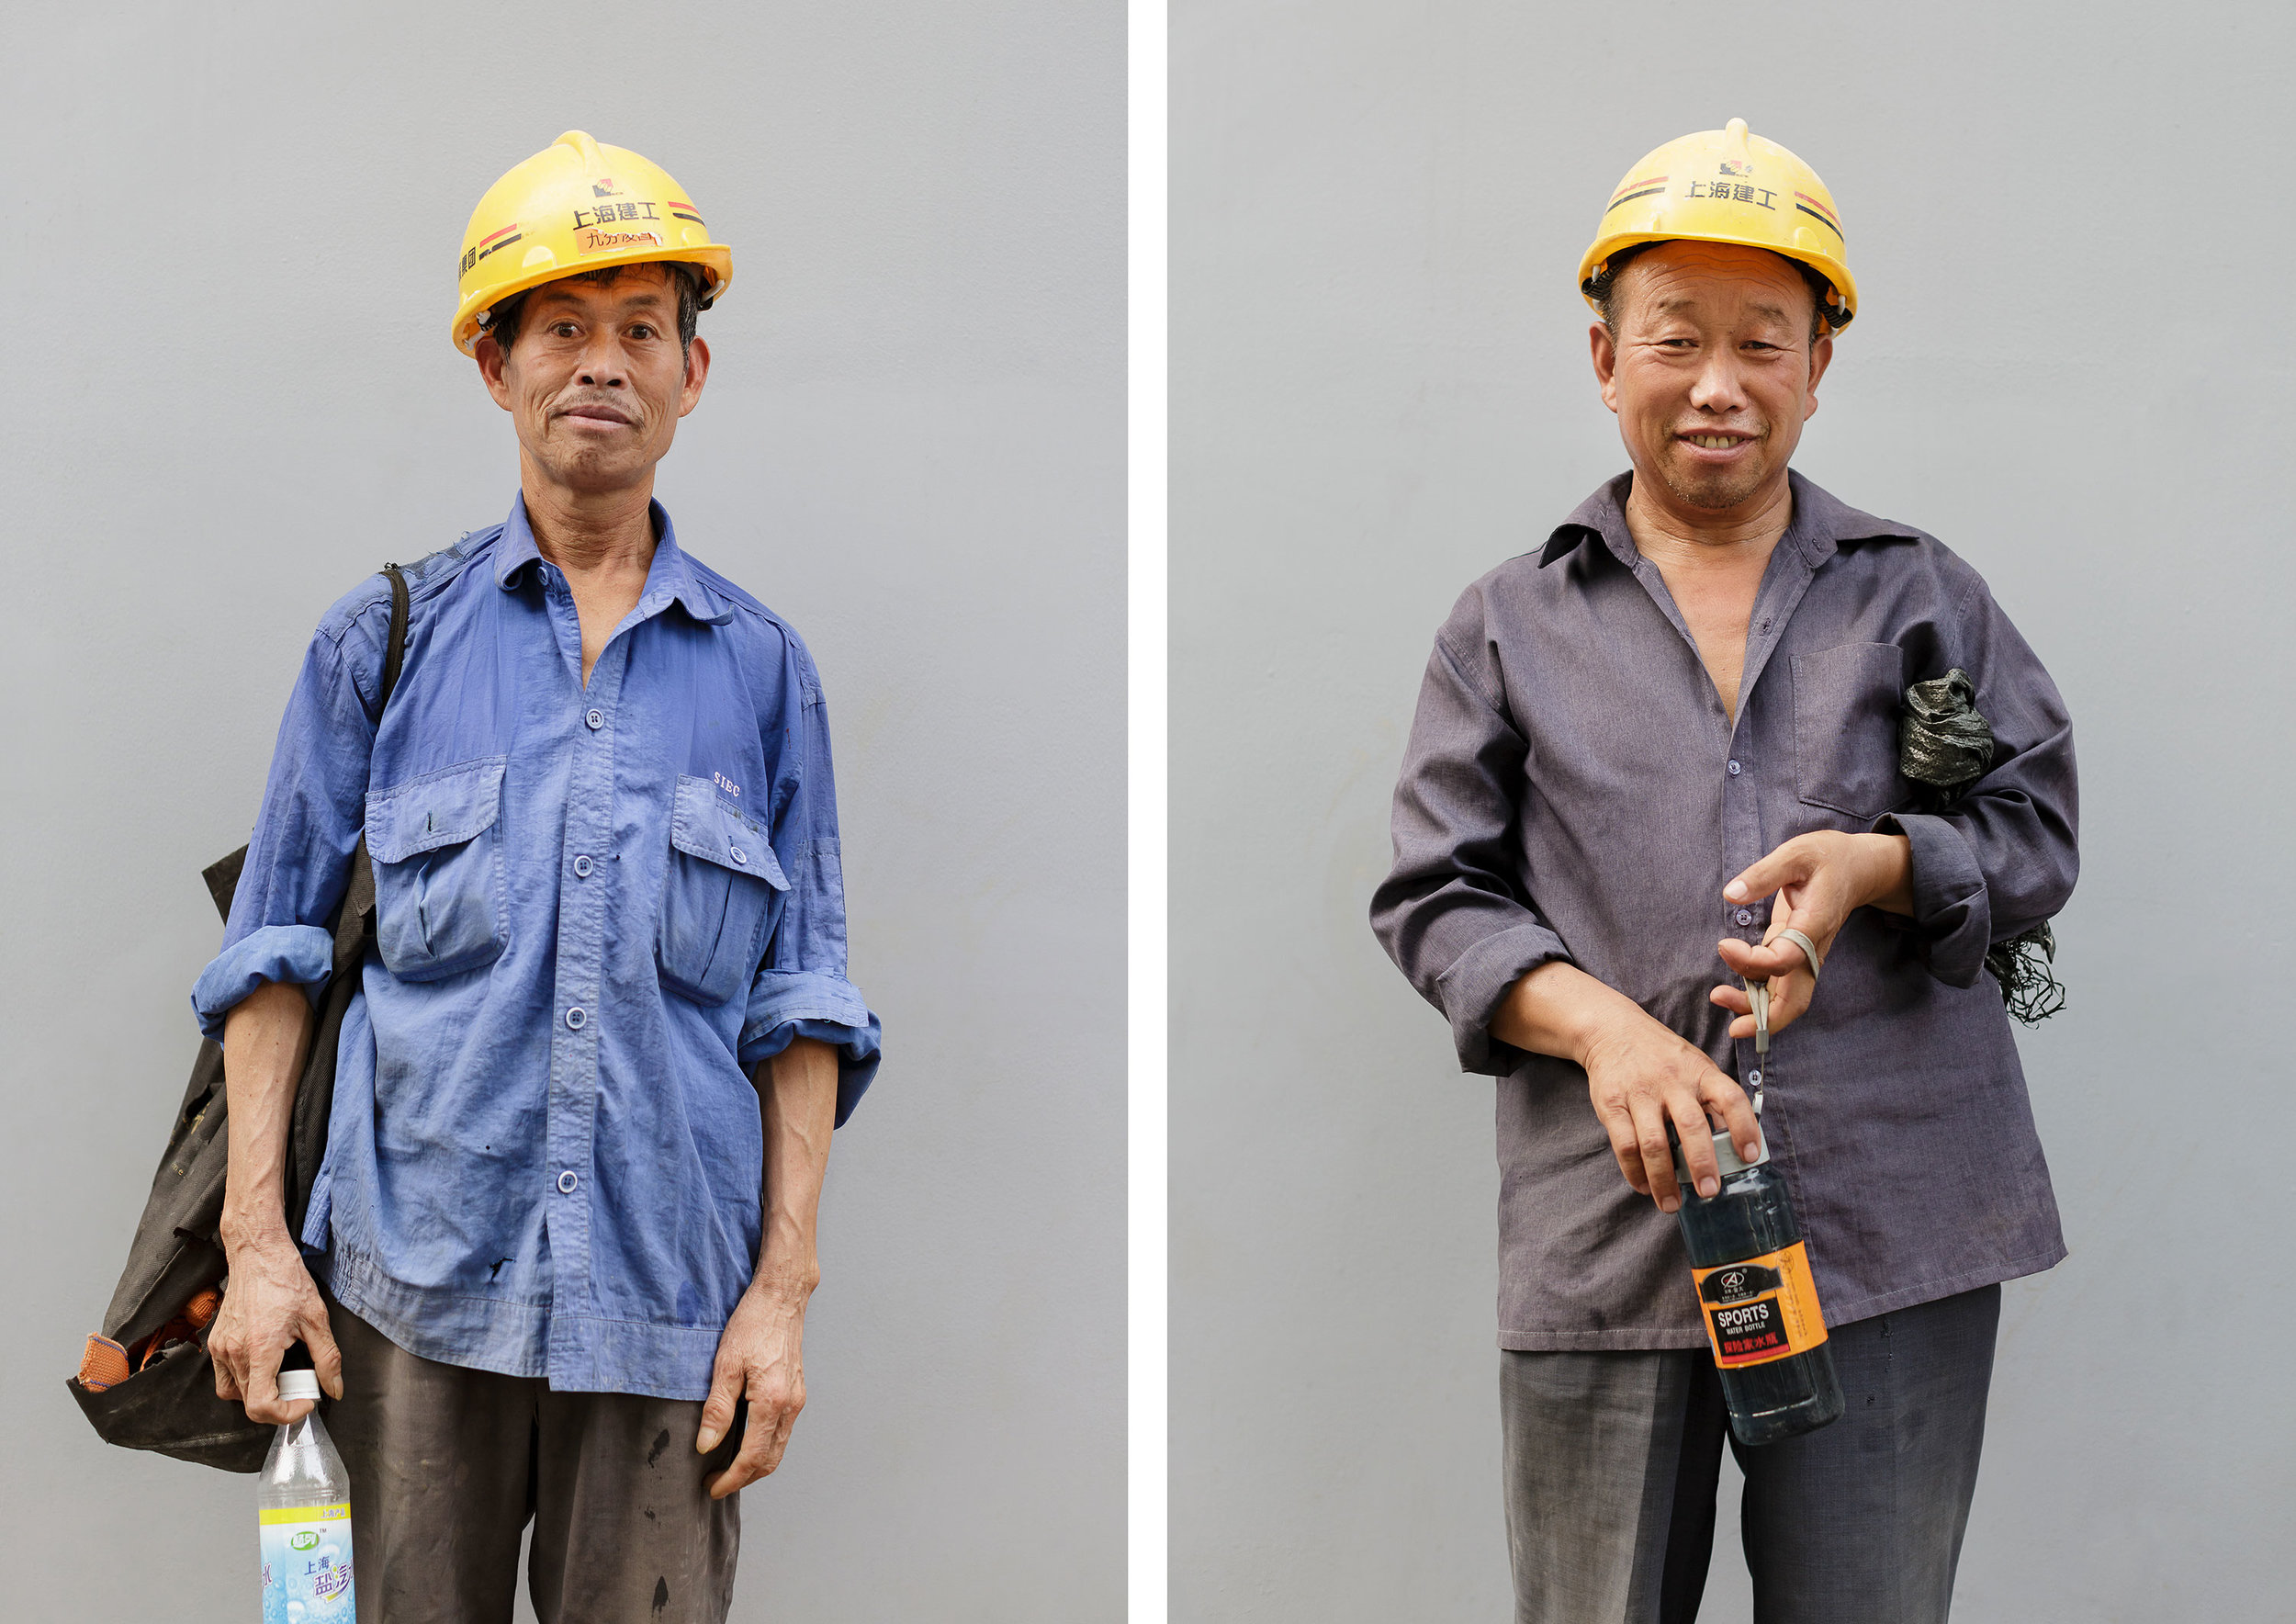 Shanghai_Tower-workers-and-building22.jpg